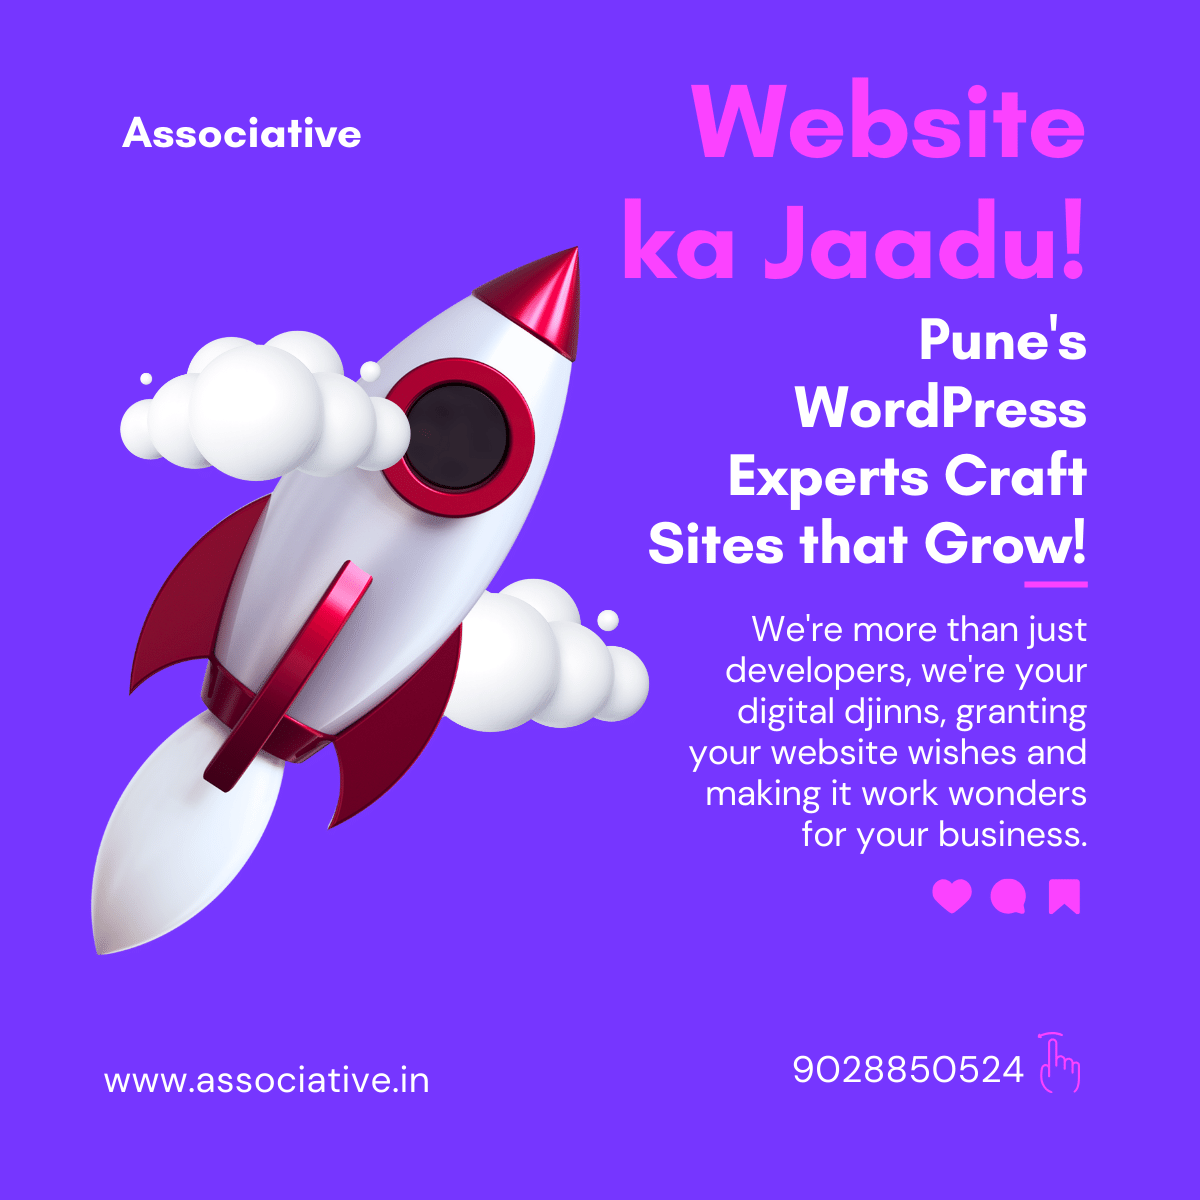 Website ka Jaadu! Pune's WordPress Experts Craft Sites that Grow!